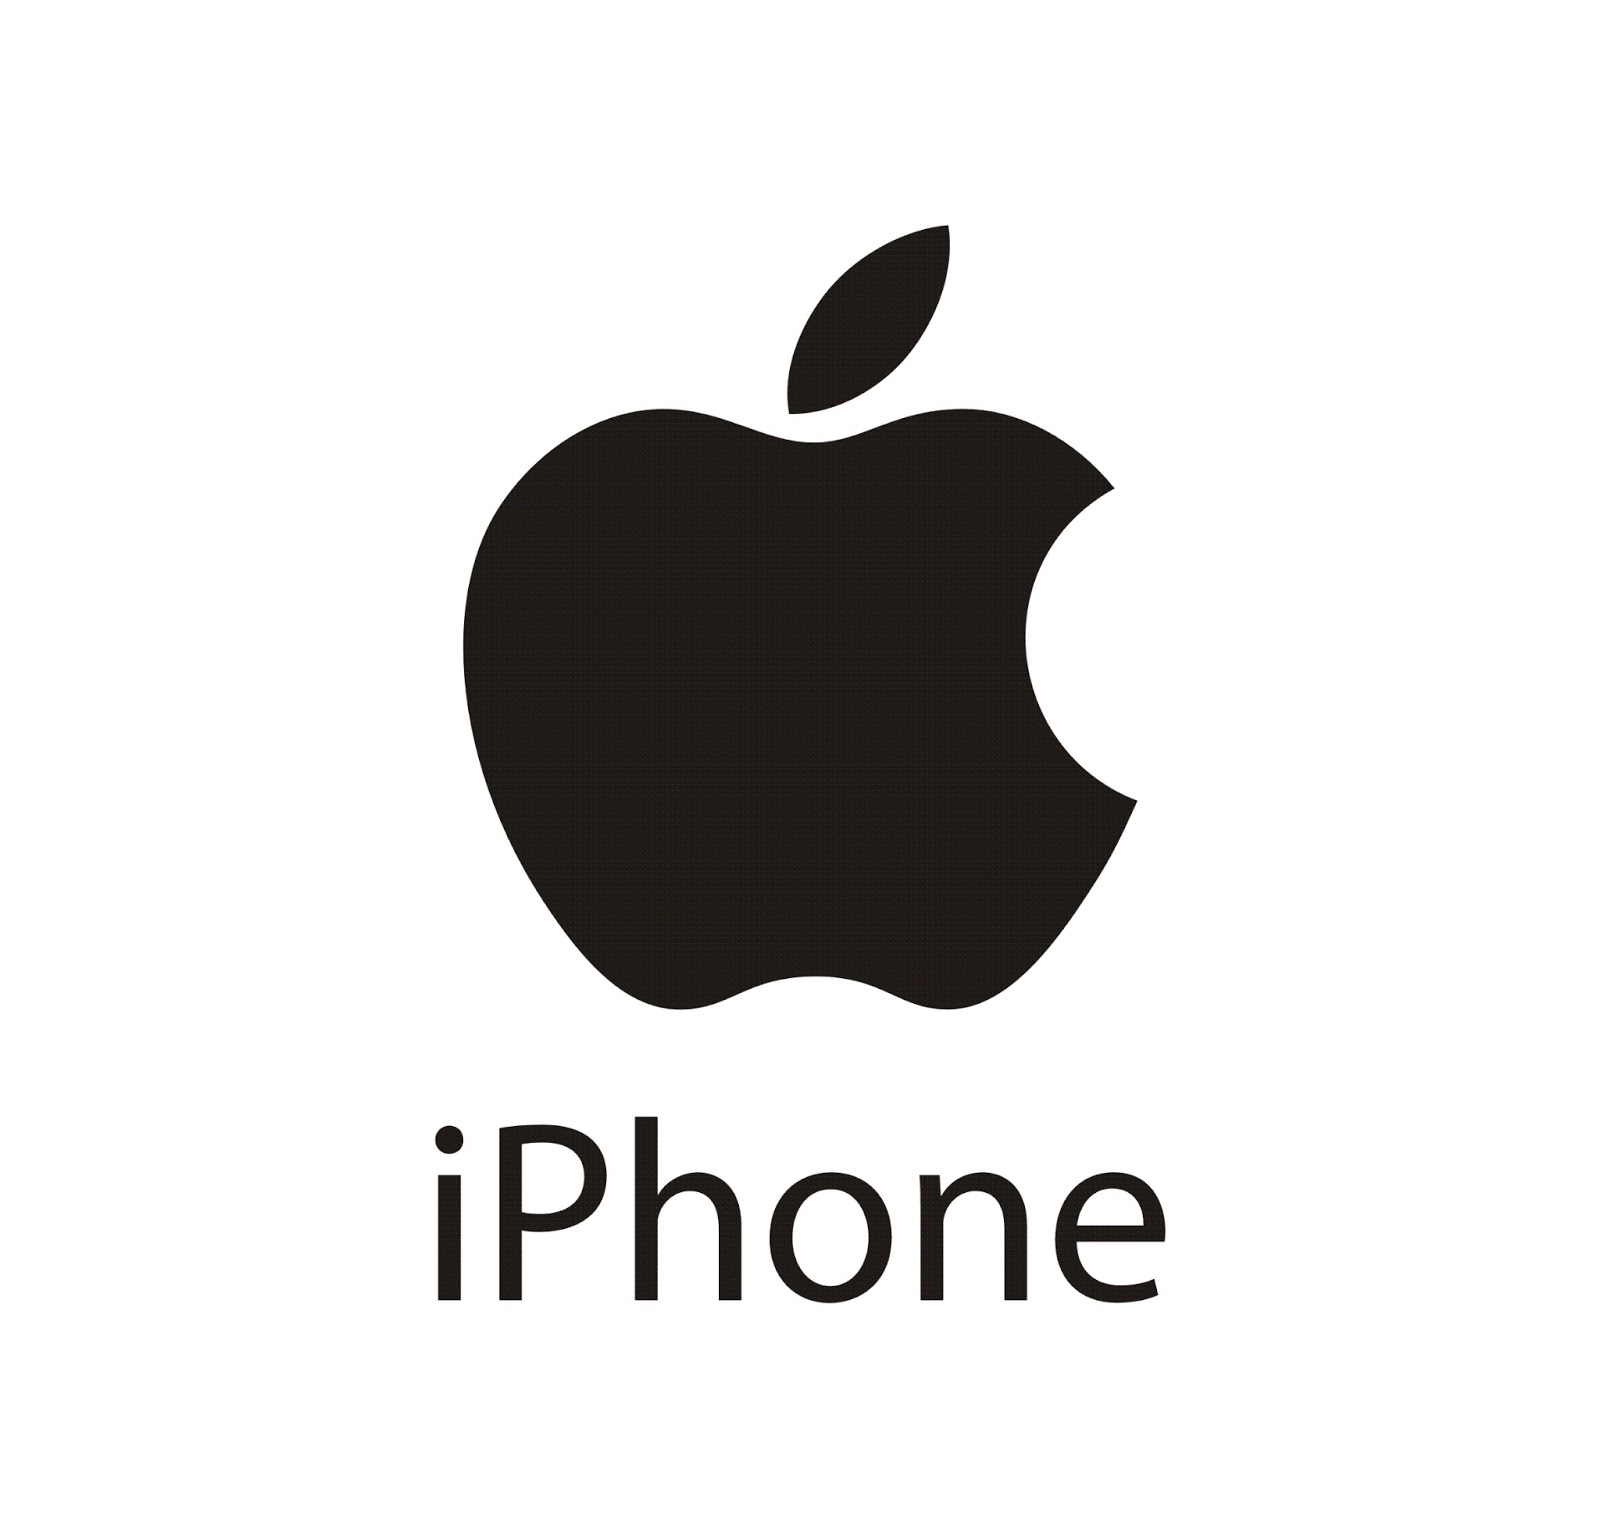 Apple iPhone Logo Vector